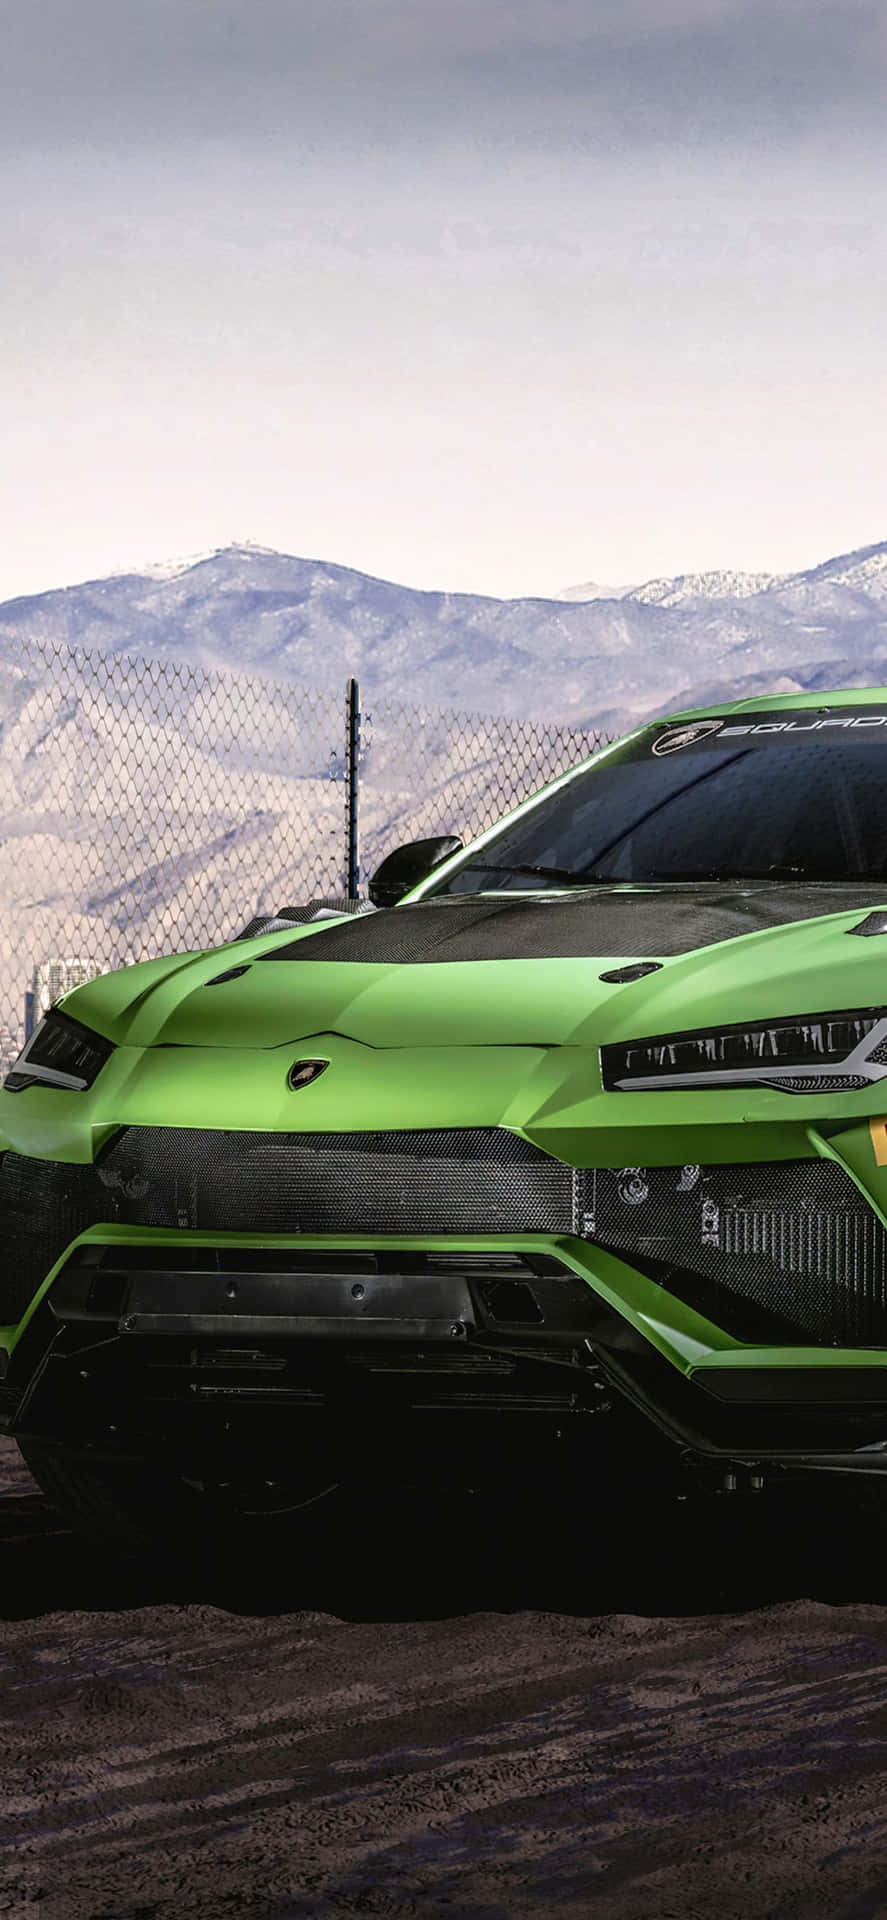 Føl kraften i at køre en grøn Lamborghini. Wallpaper